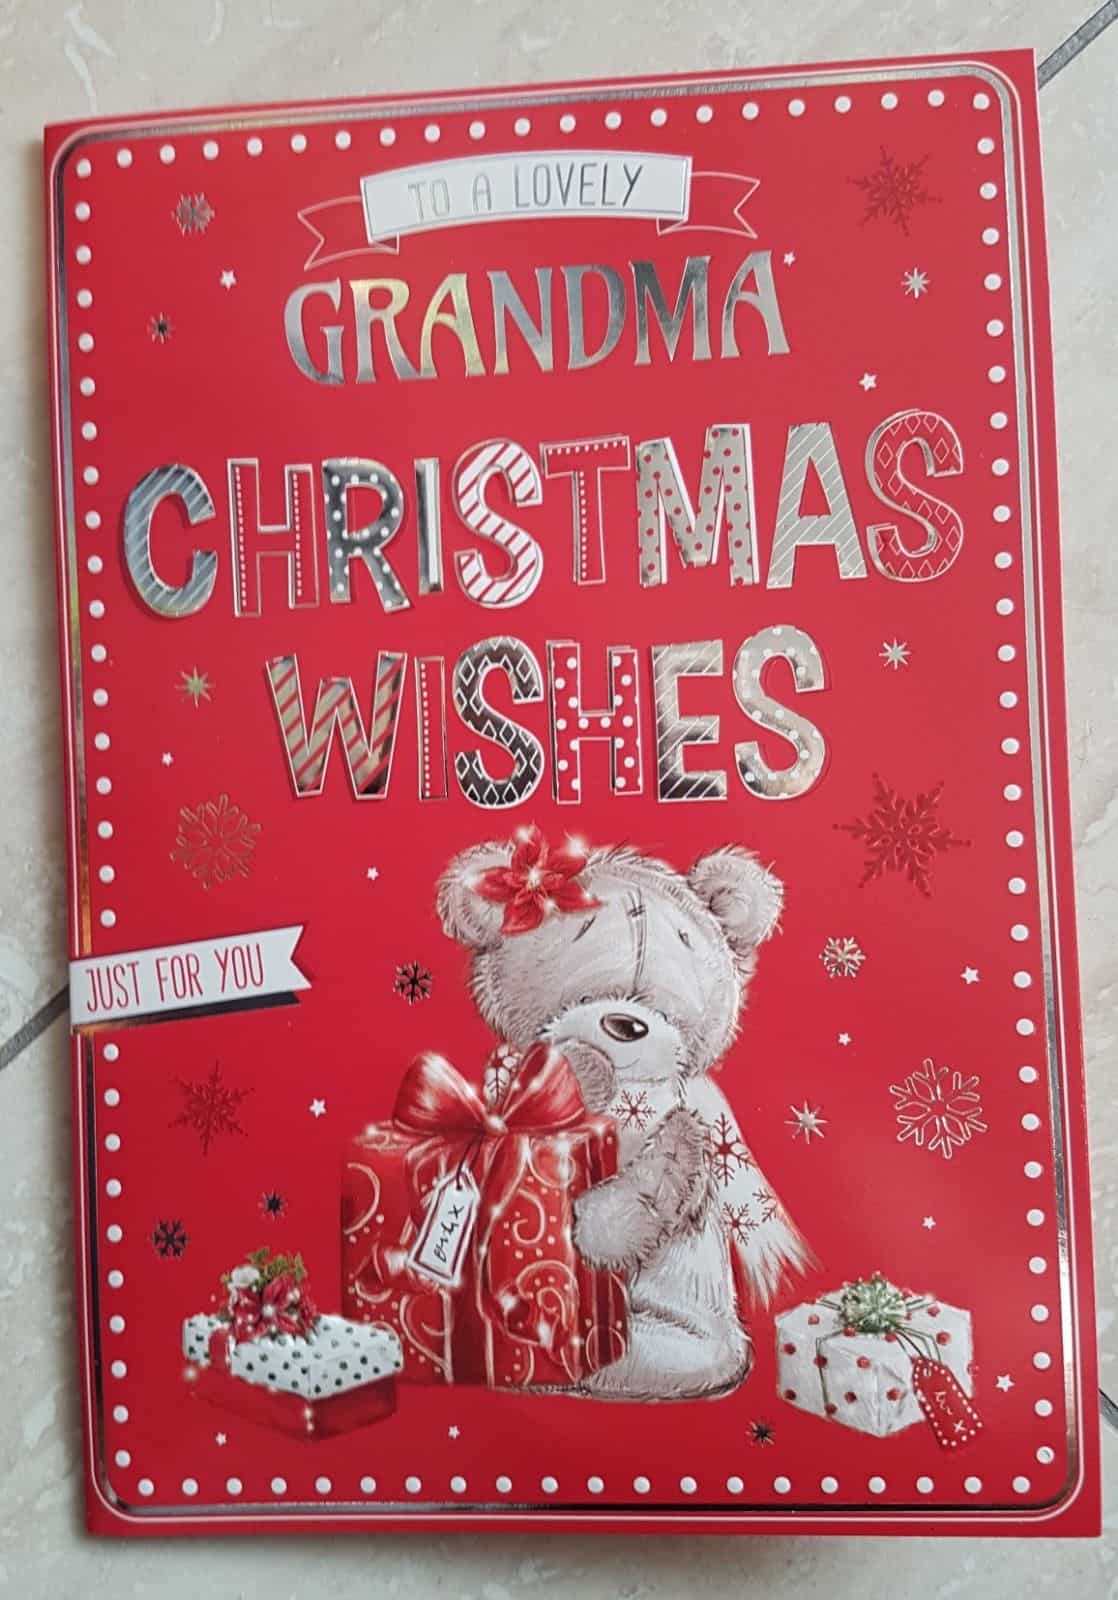 Grandma Christmas Card 'To A Lovely Grandma' Cute Teddy ...